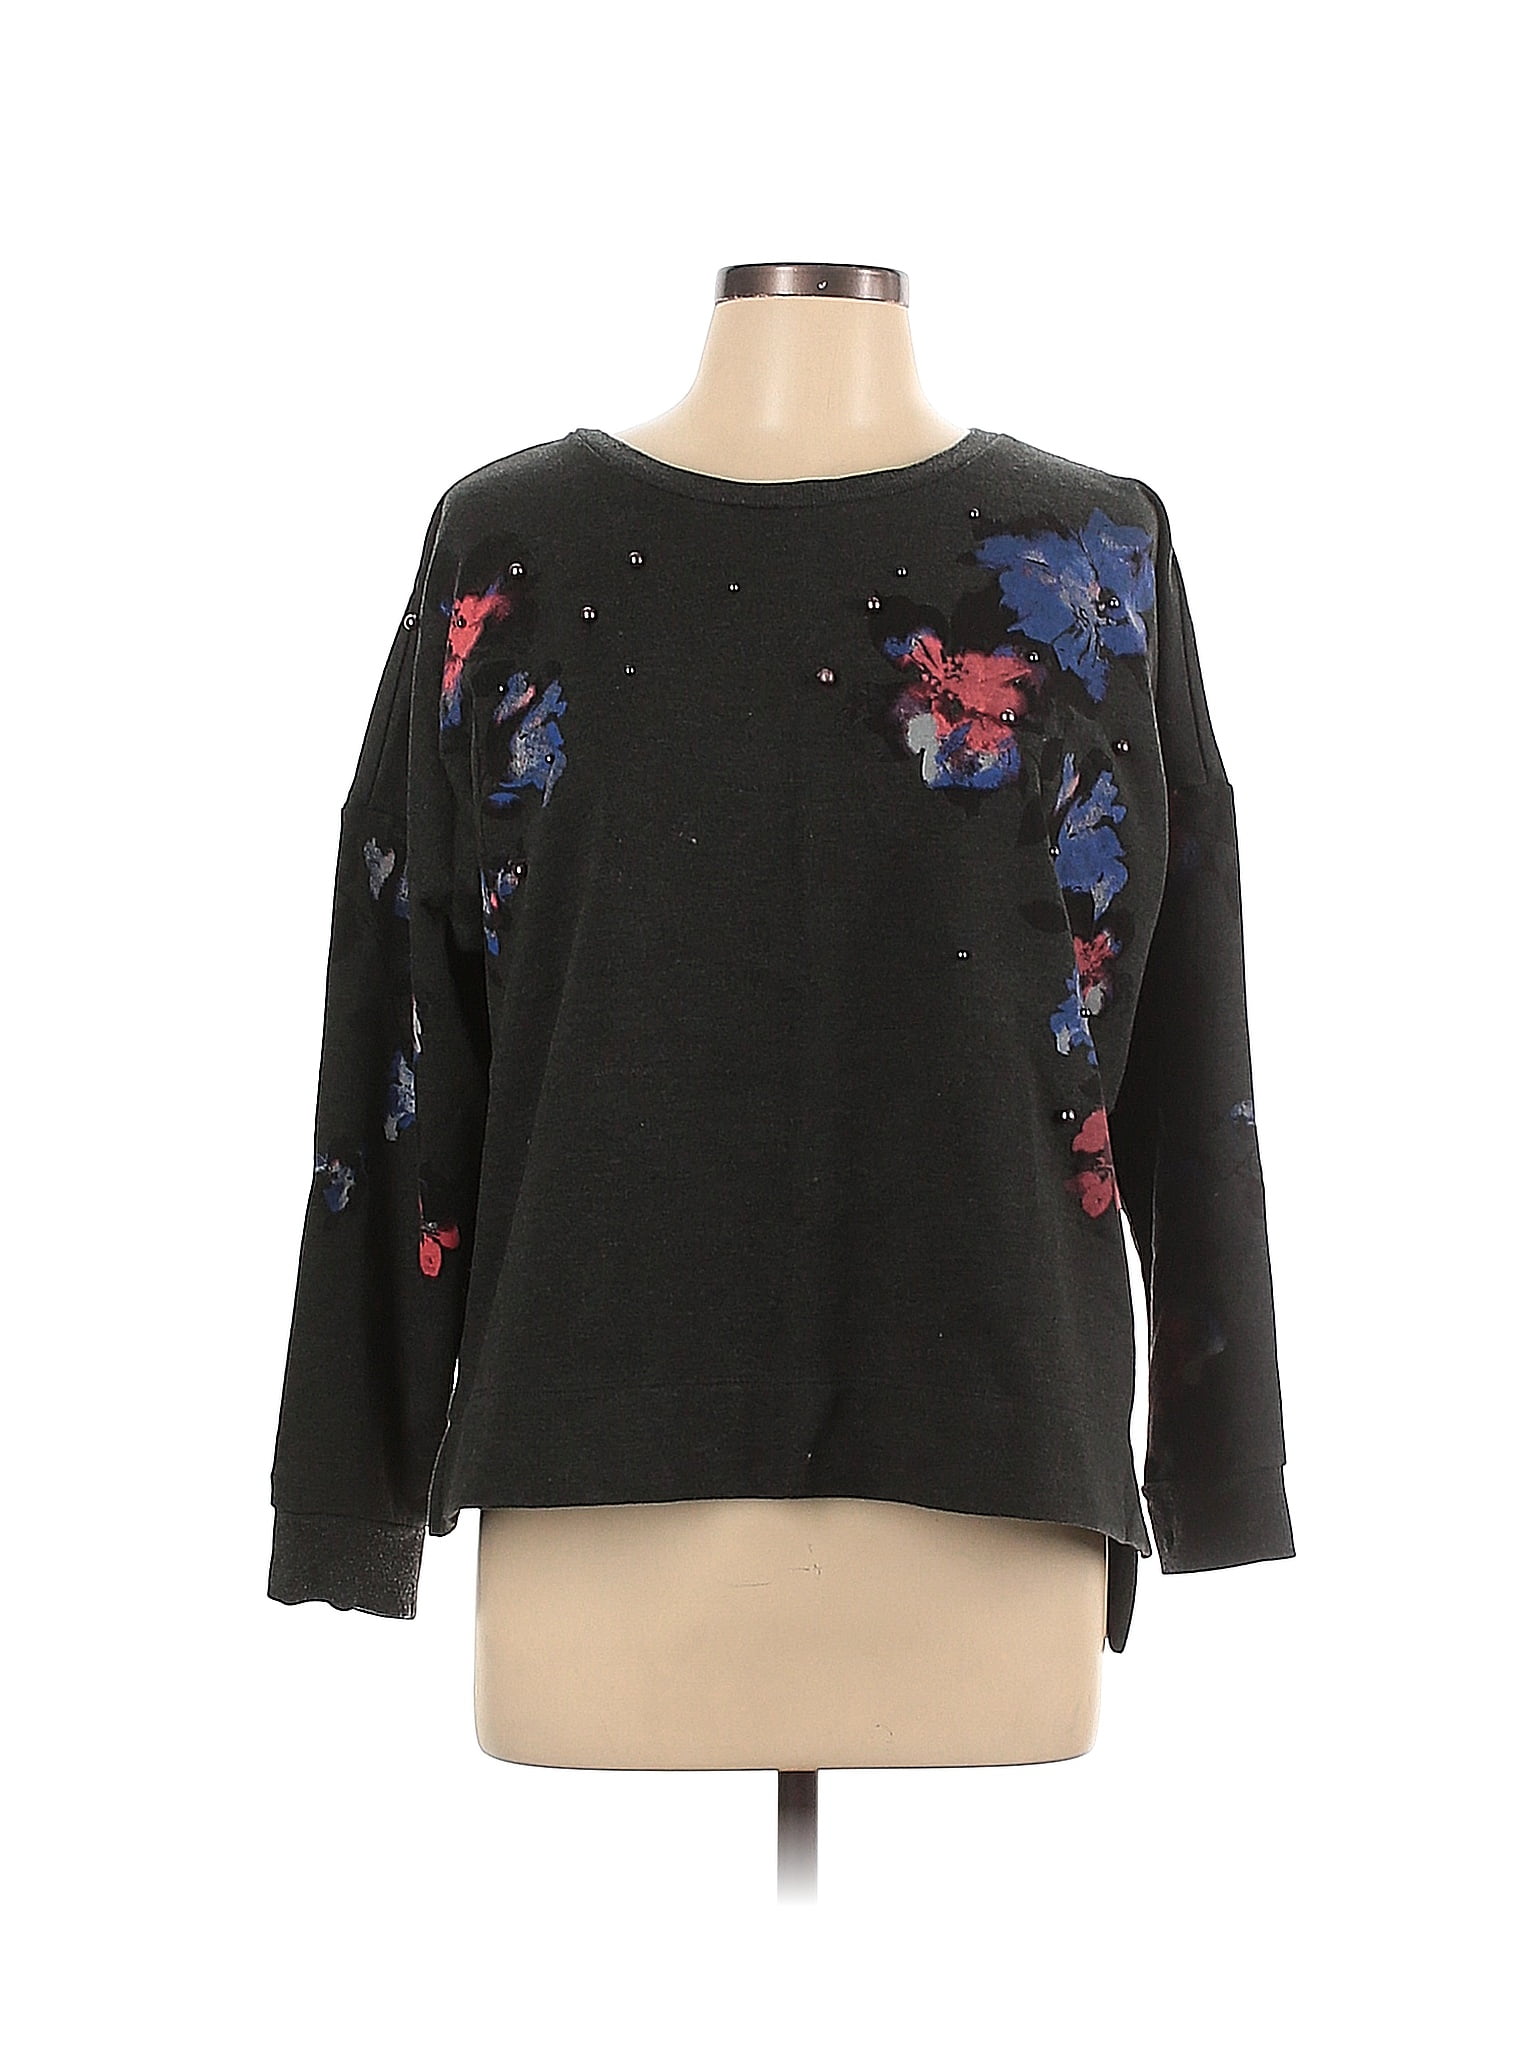 Simply Vera Vera Wang Black Pullover Sweater Size L - 65% off | thredUP